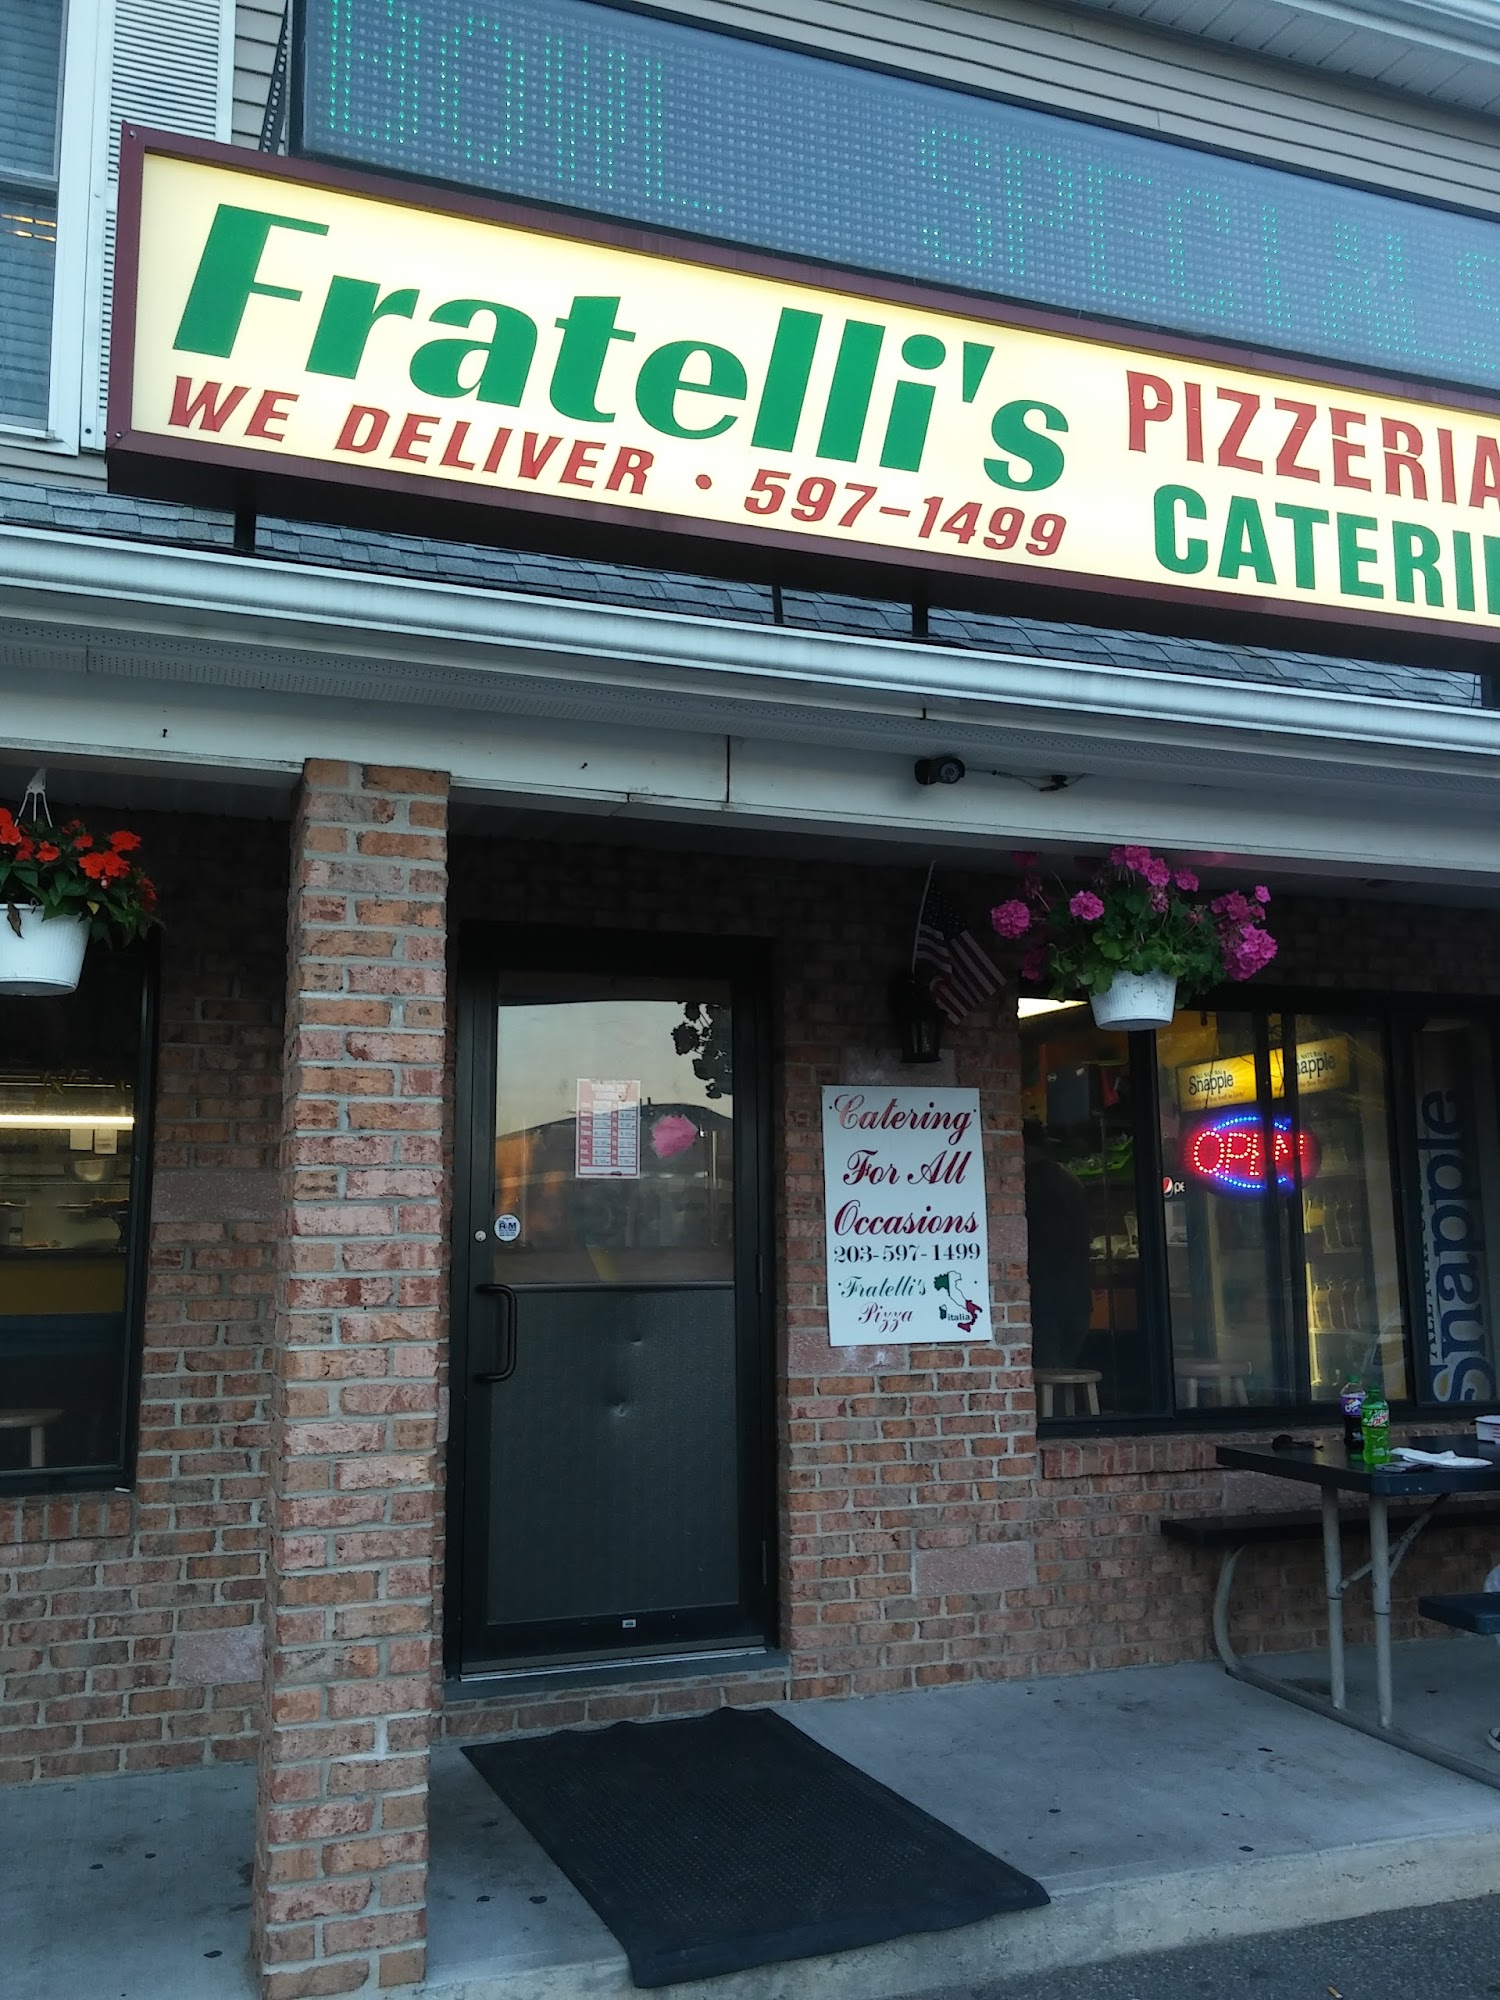 Fratelli's Pizzeria & Catering